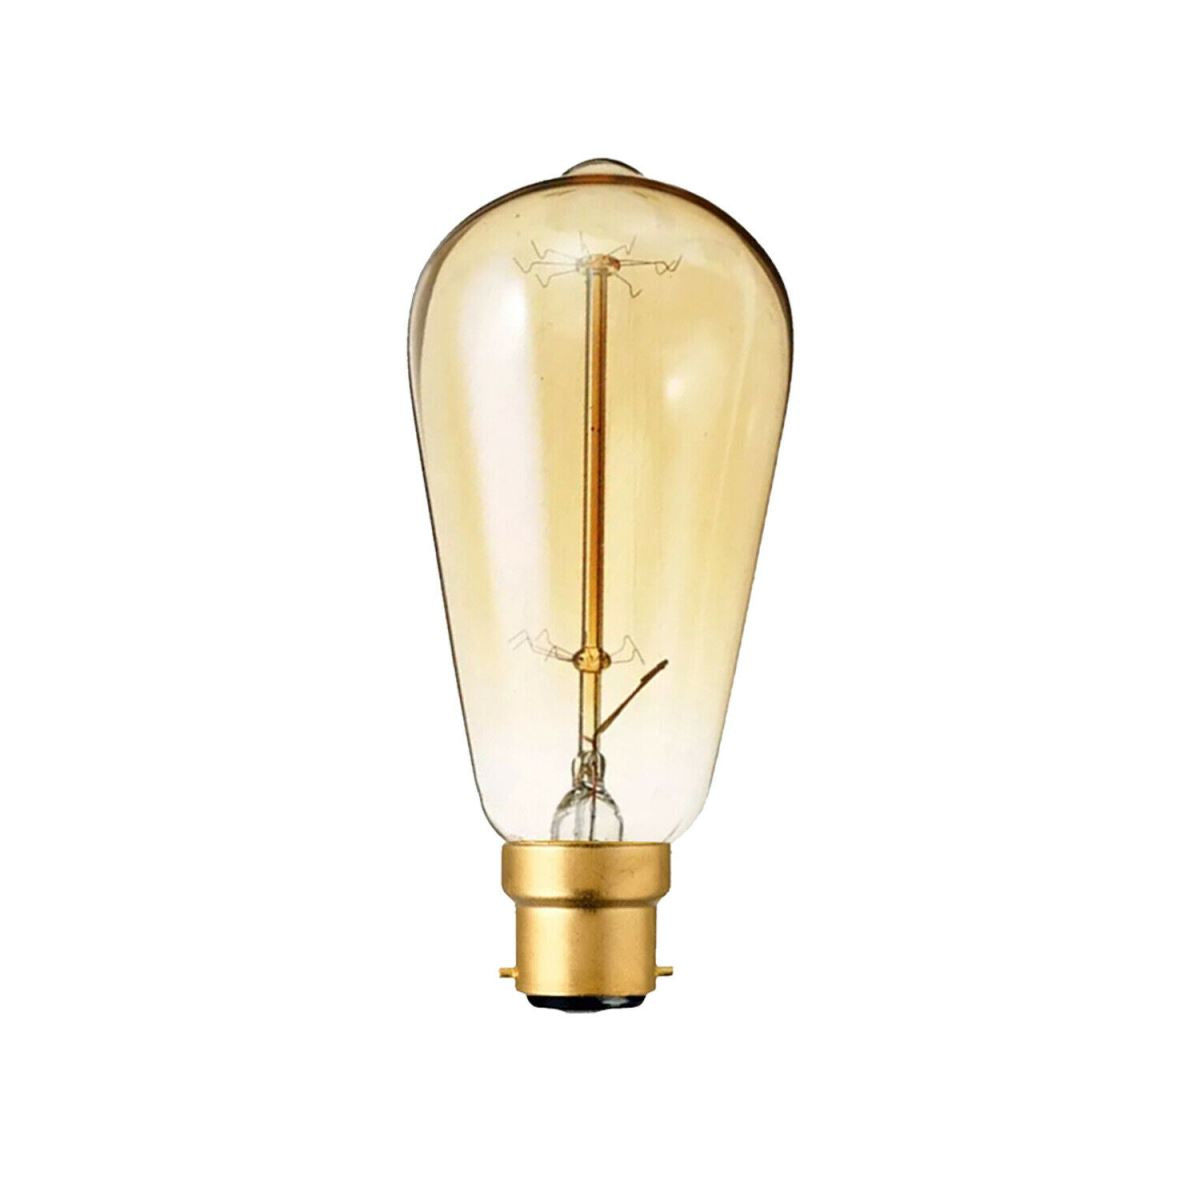 Edison Vintage Light Bulbs with Bayonet Fitting Classic  60W